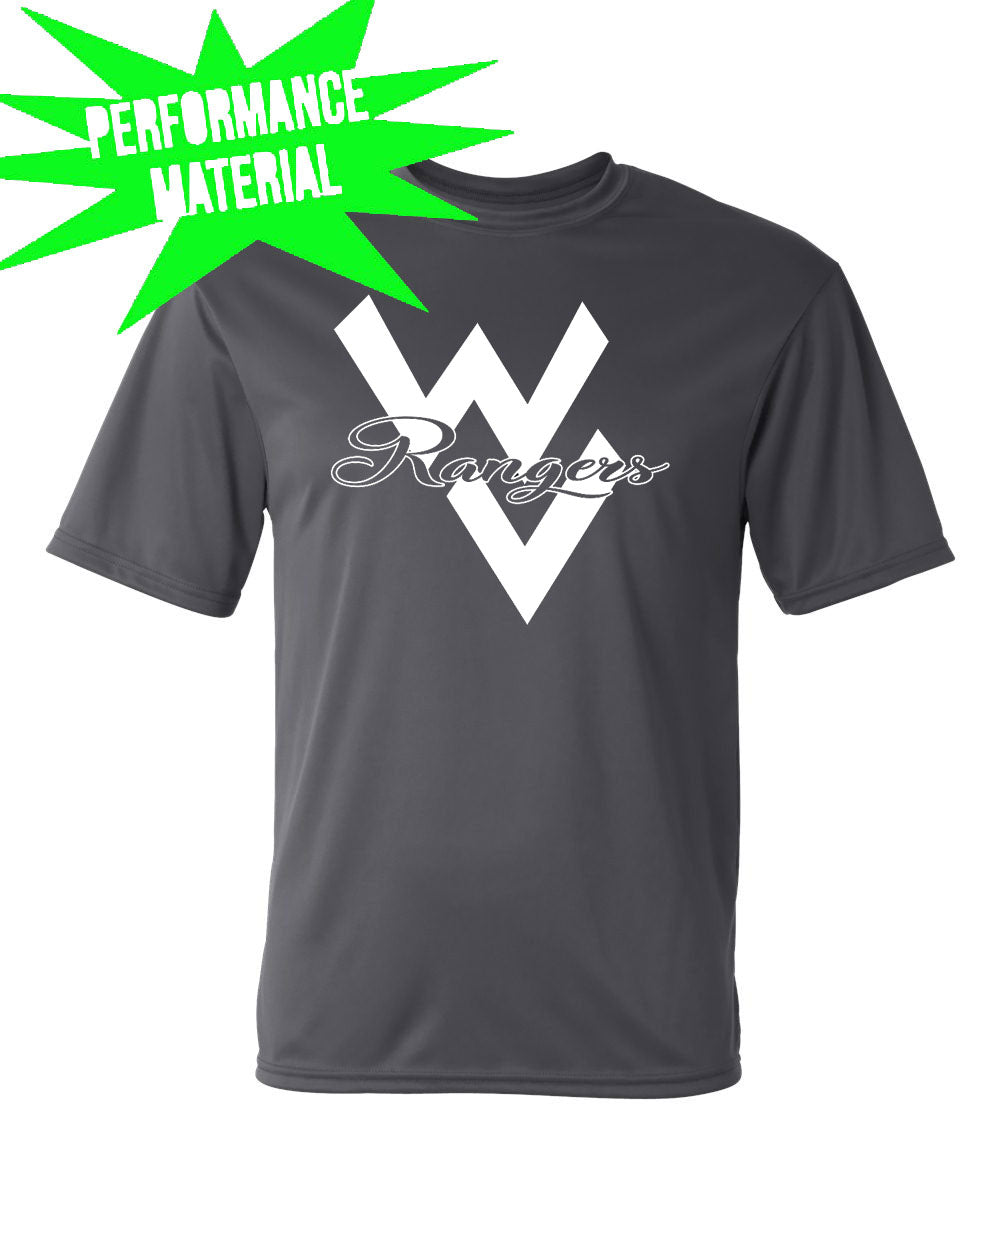 Wallkill Cheer Performance Material design 1 T-Shirt